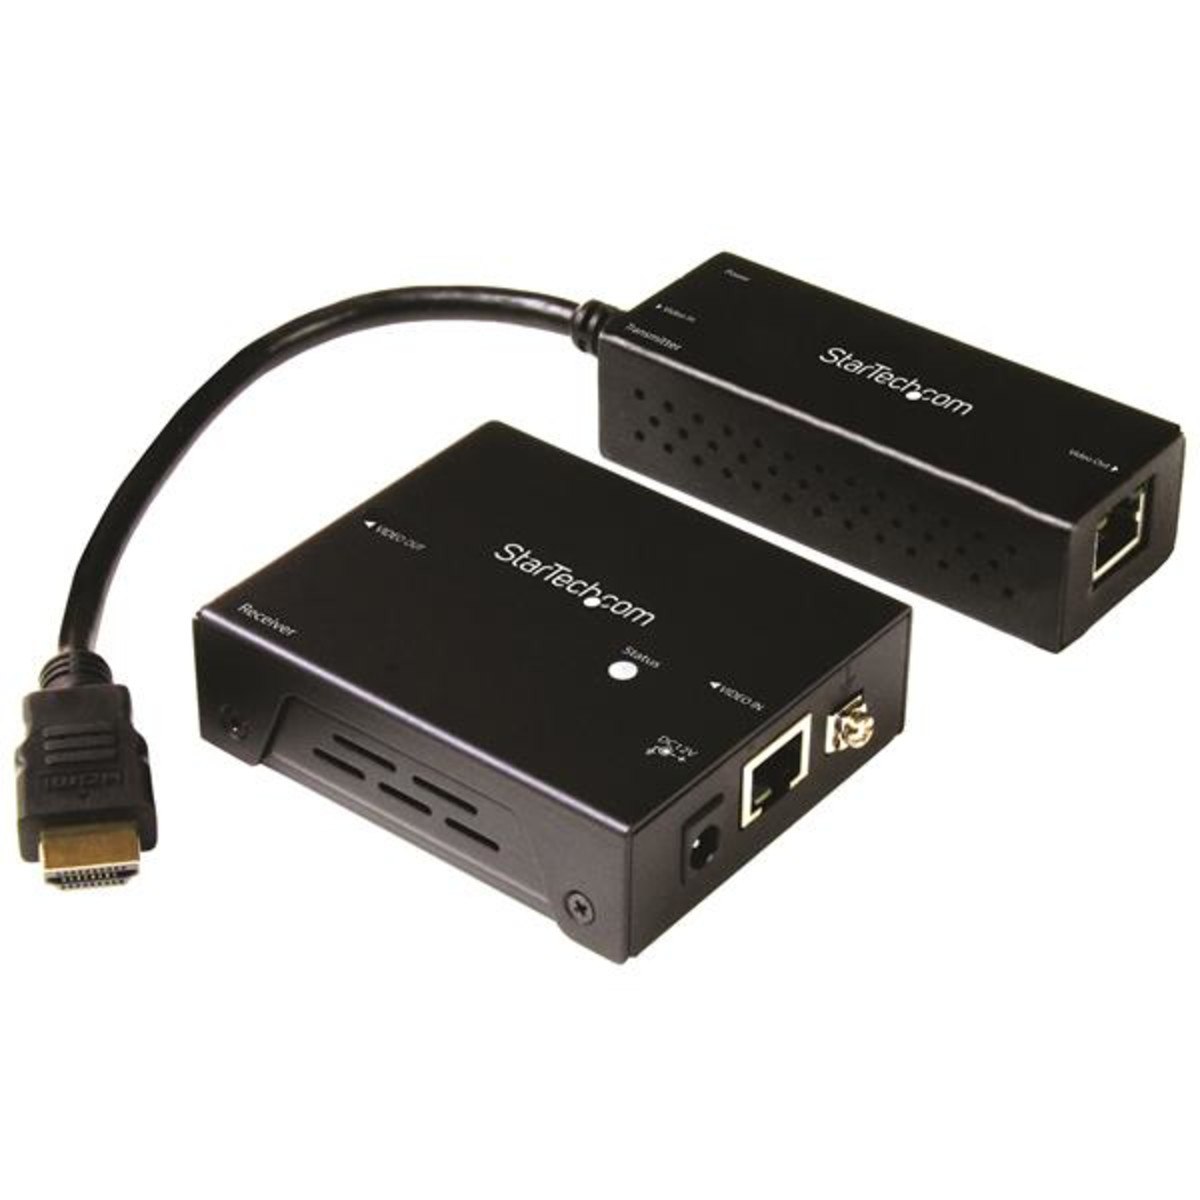 HDBaseT Extender Kit - HDMI Over CAT5